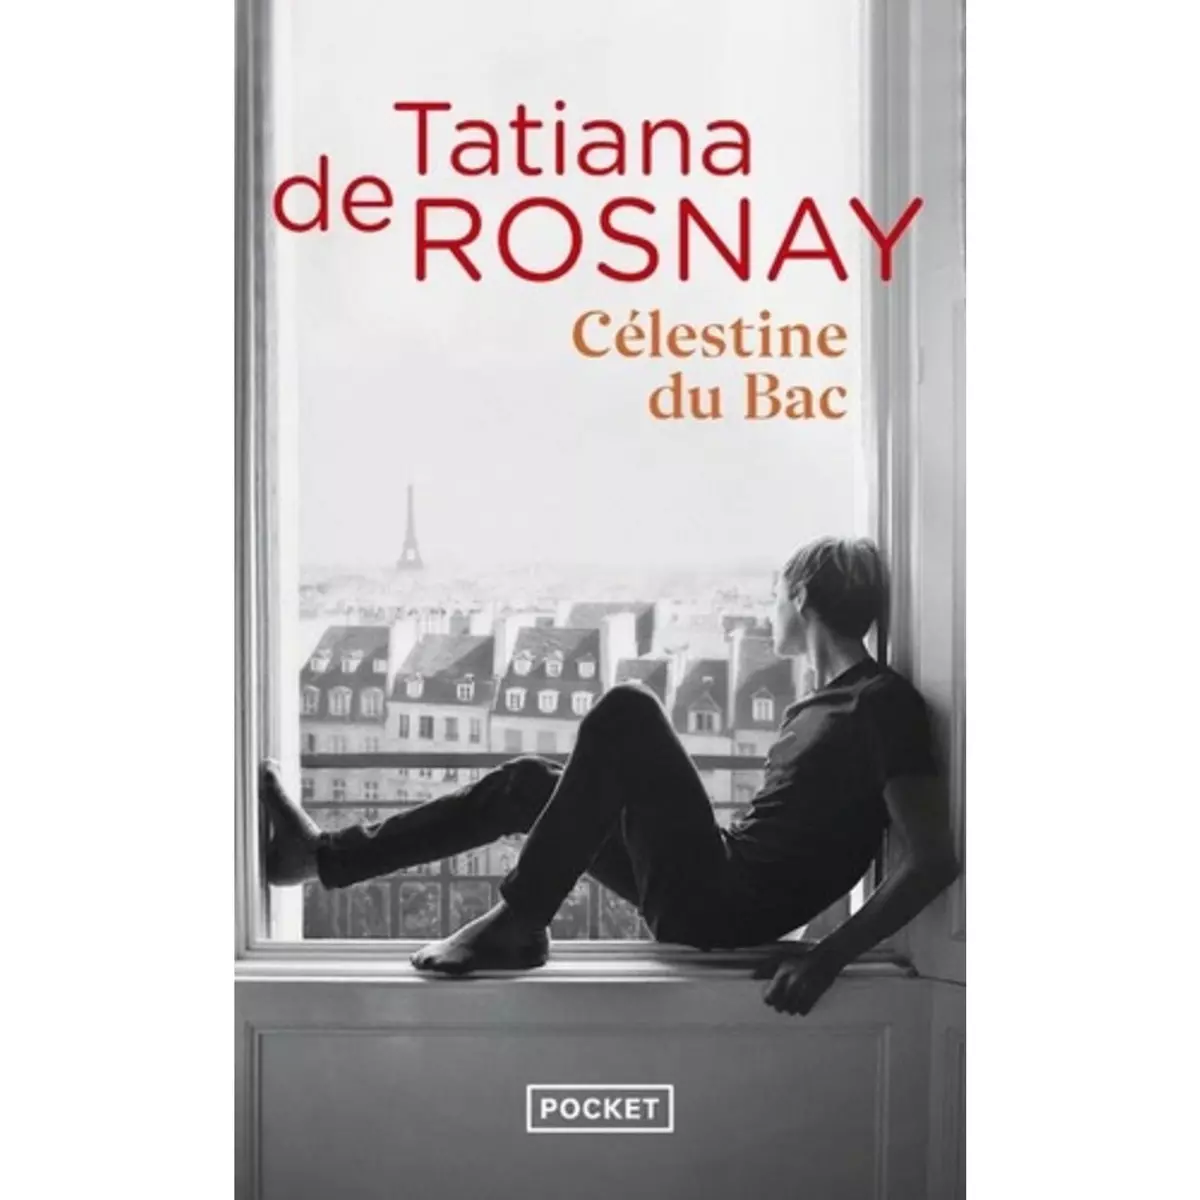  CELESTINE DU BAC, Rosnay Tatiana de